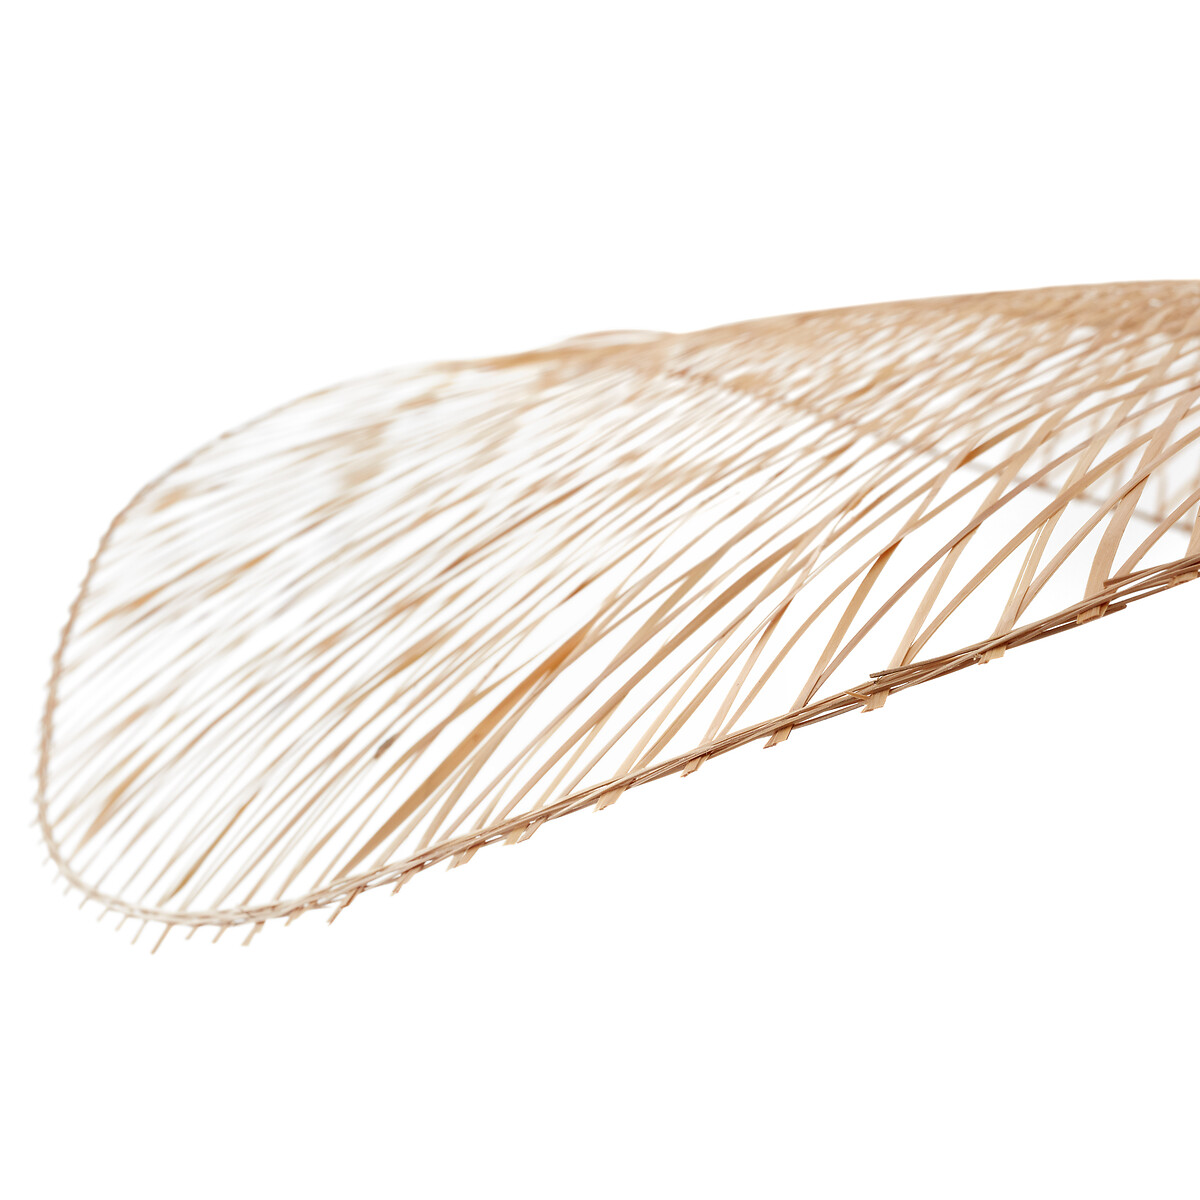 Абажур LA REDOUTE INTERIEURS Абажур Воздушный из бамбука 130 см Ezia единый размер бежевый - фото 3